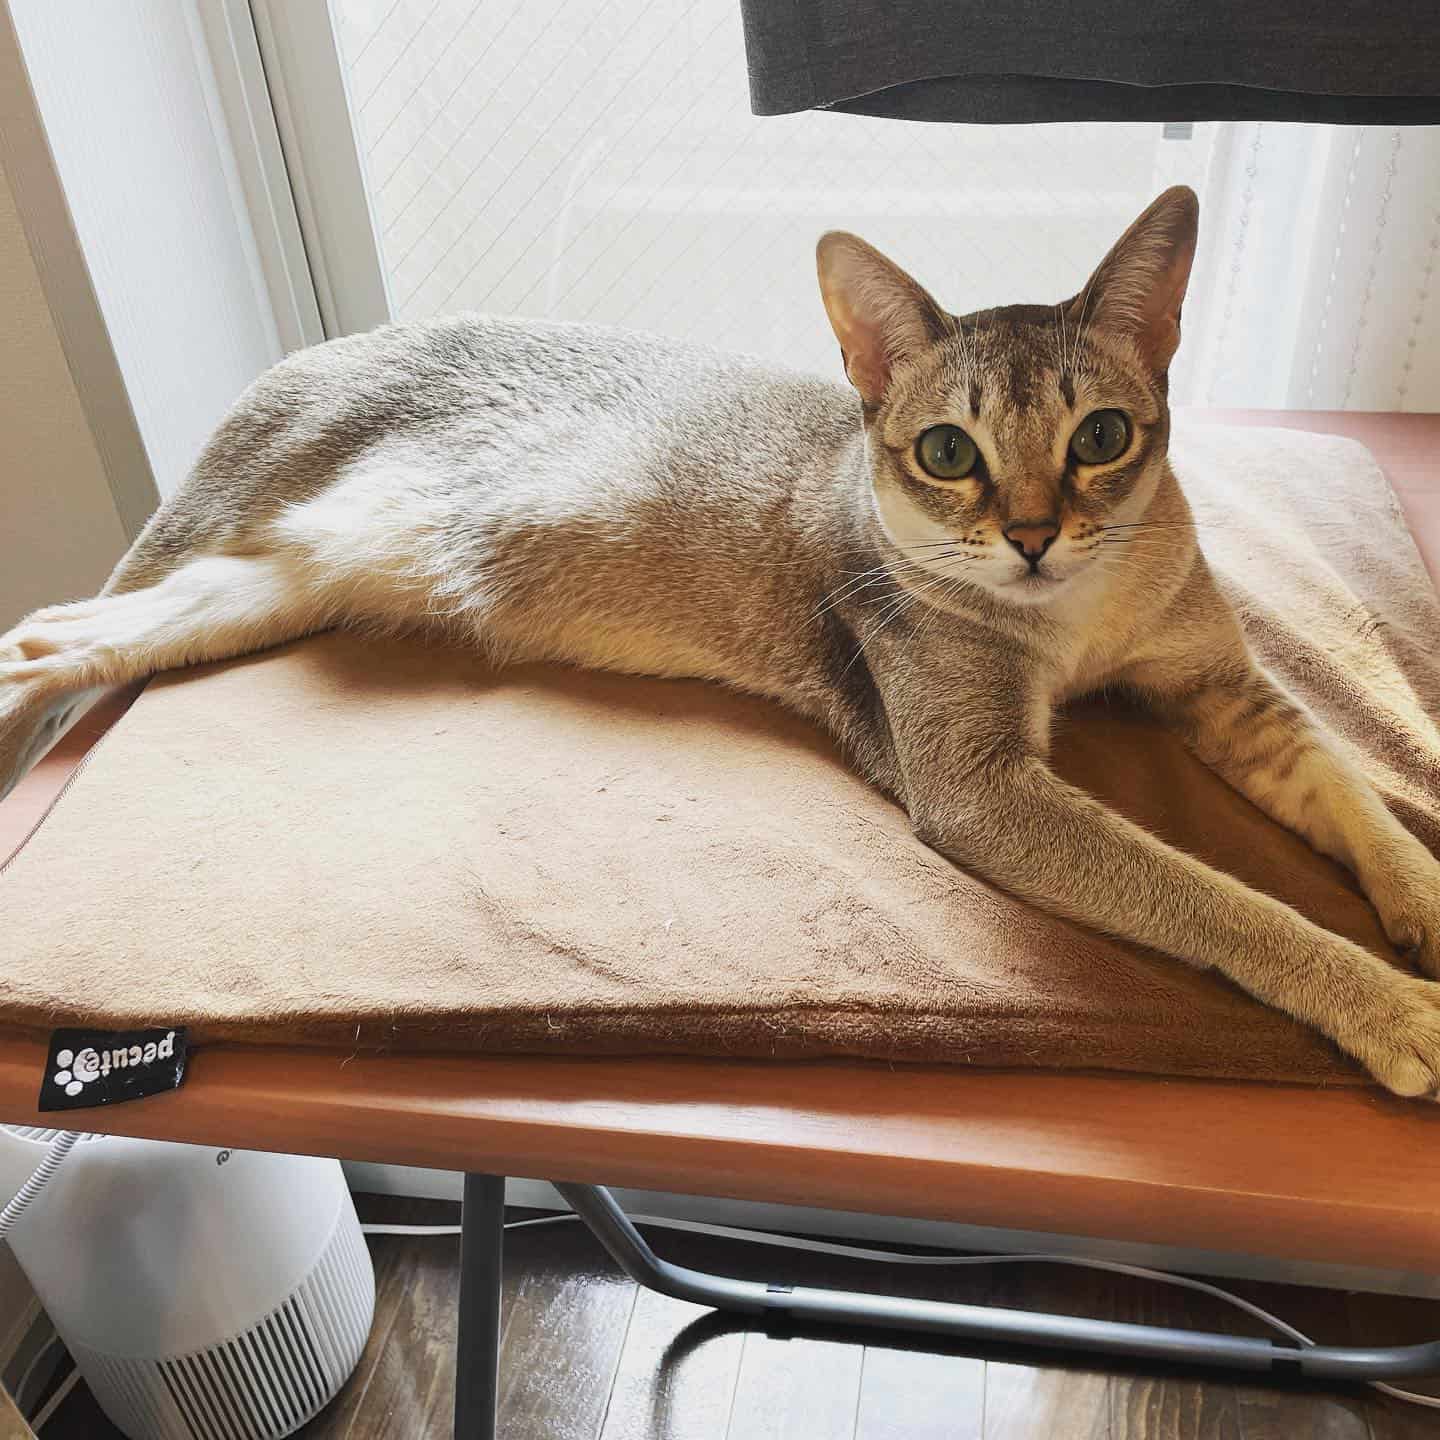 singapura cat laying on the table